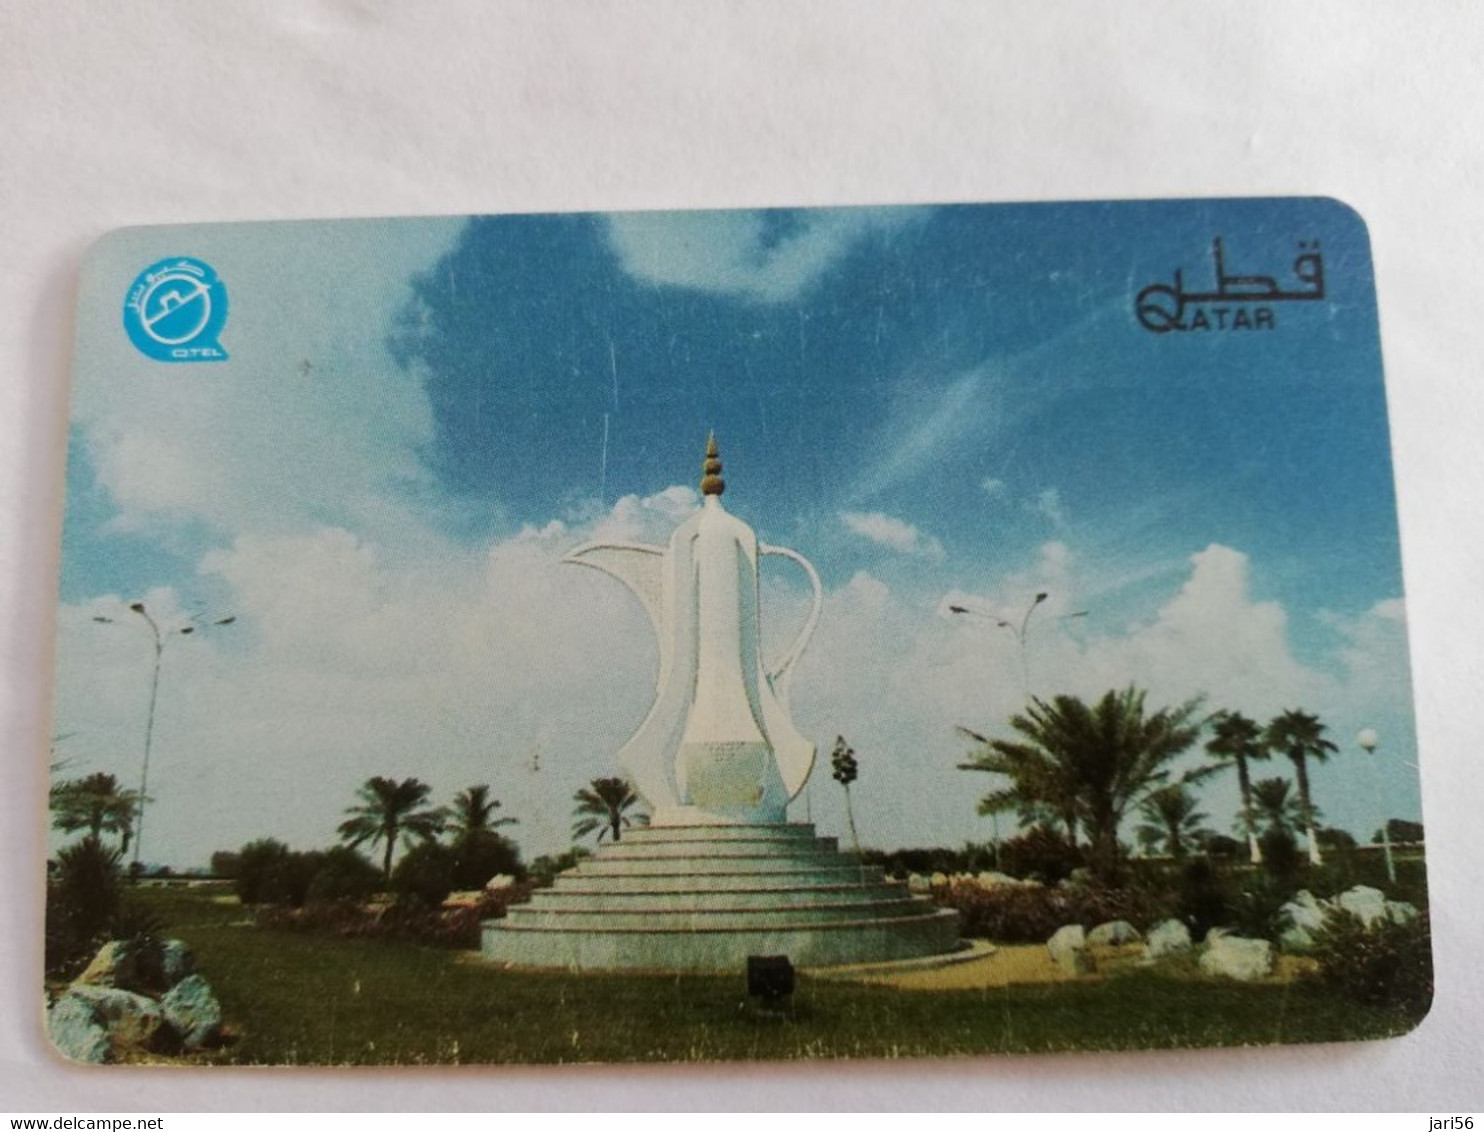 QATAR  PUBLIC TELECOM CORPORATION / PAY PHONE  MAGNETIC/ AUTELCA   Q 50   QTR 54  Dalla Monument  By Day       **9492** - Qatar